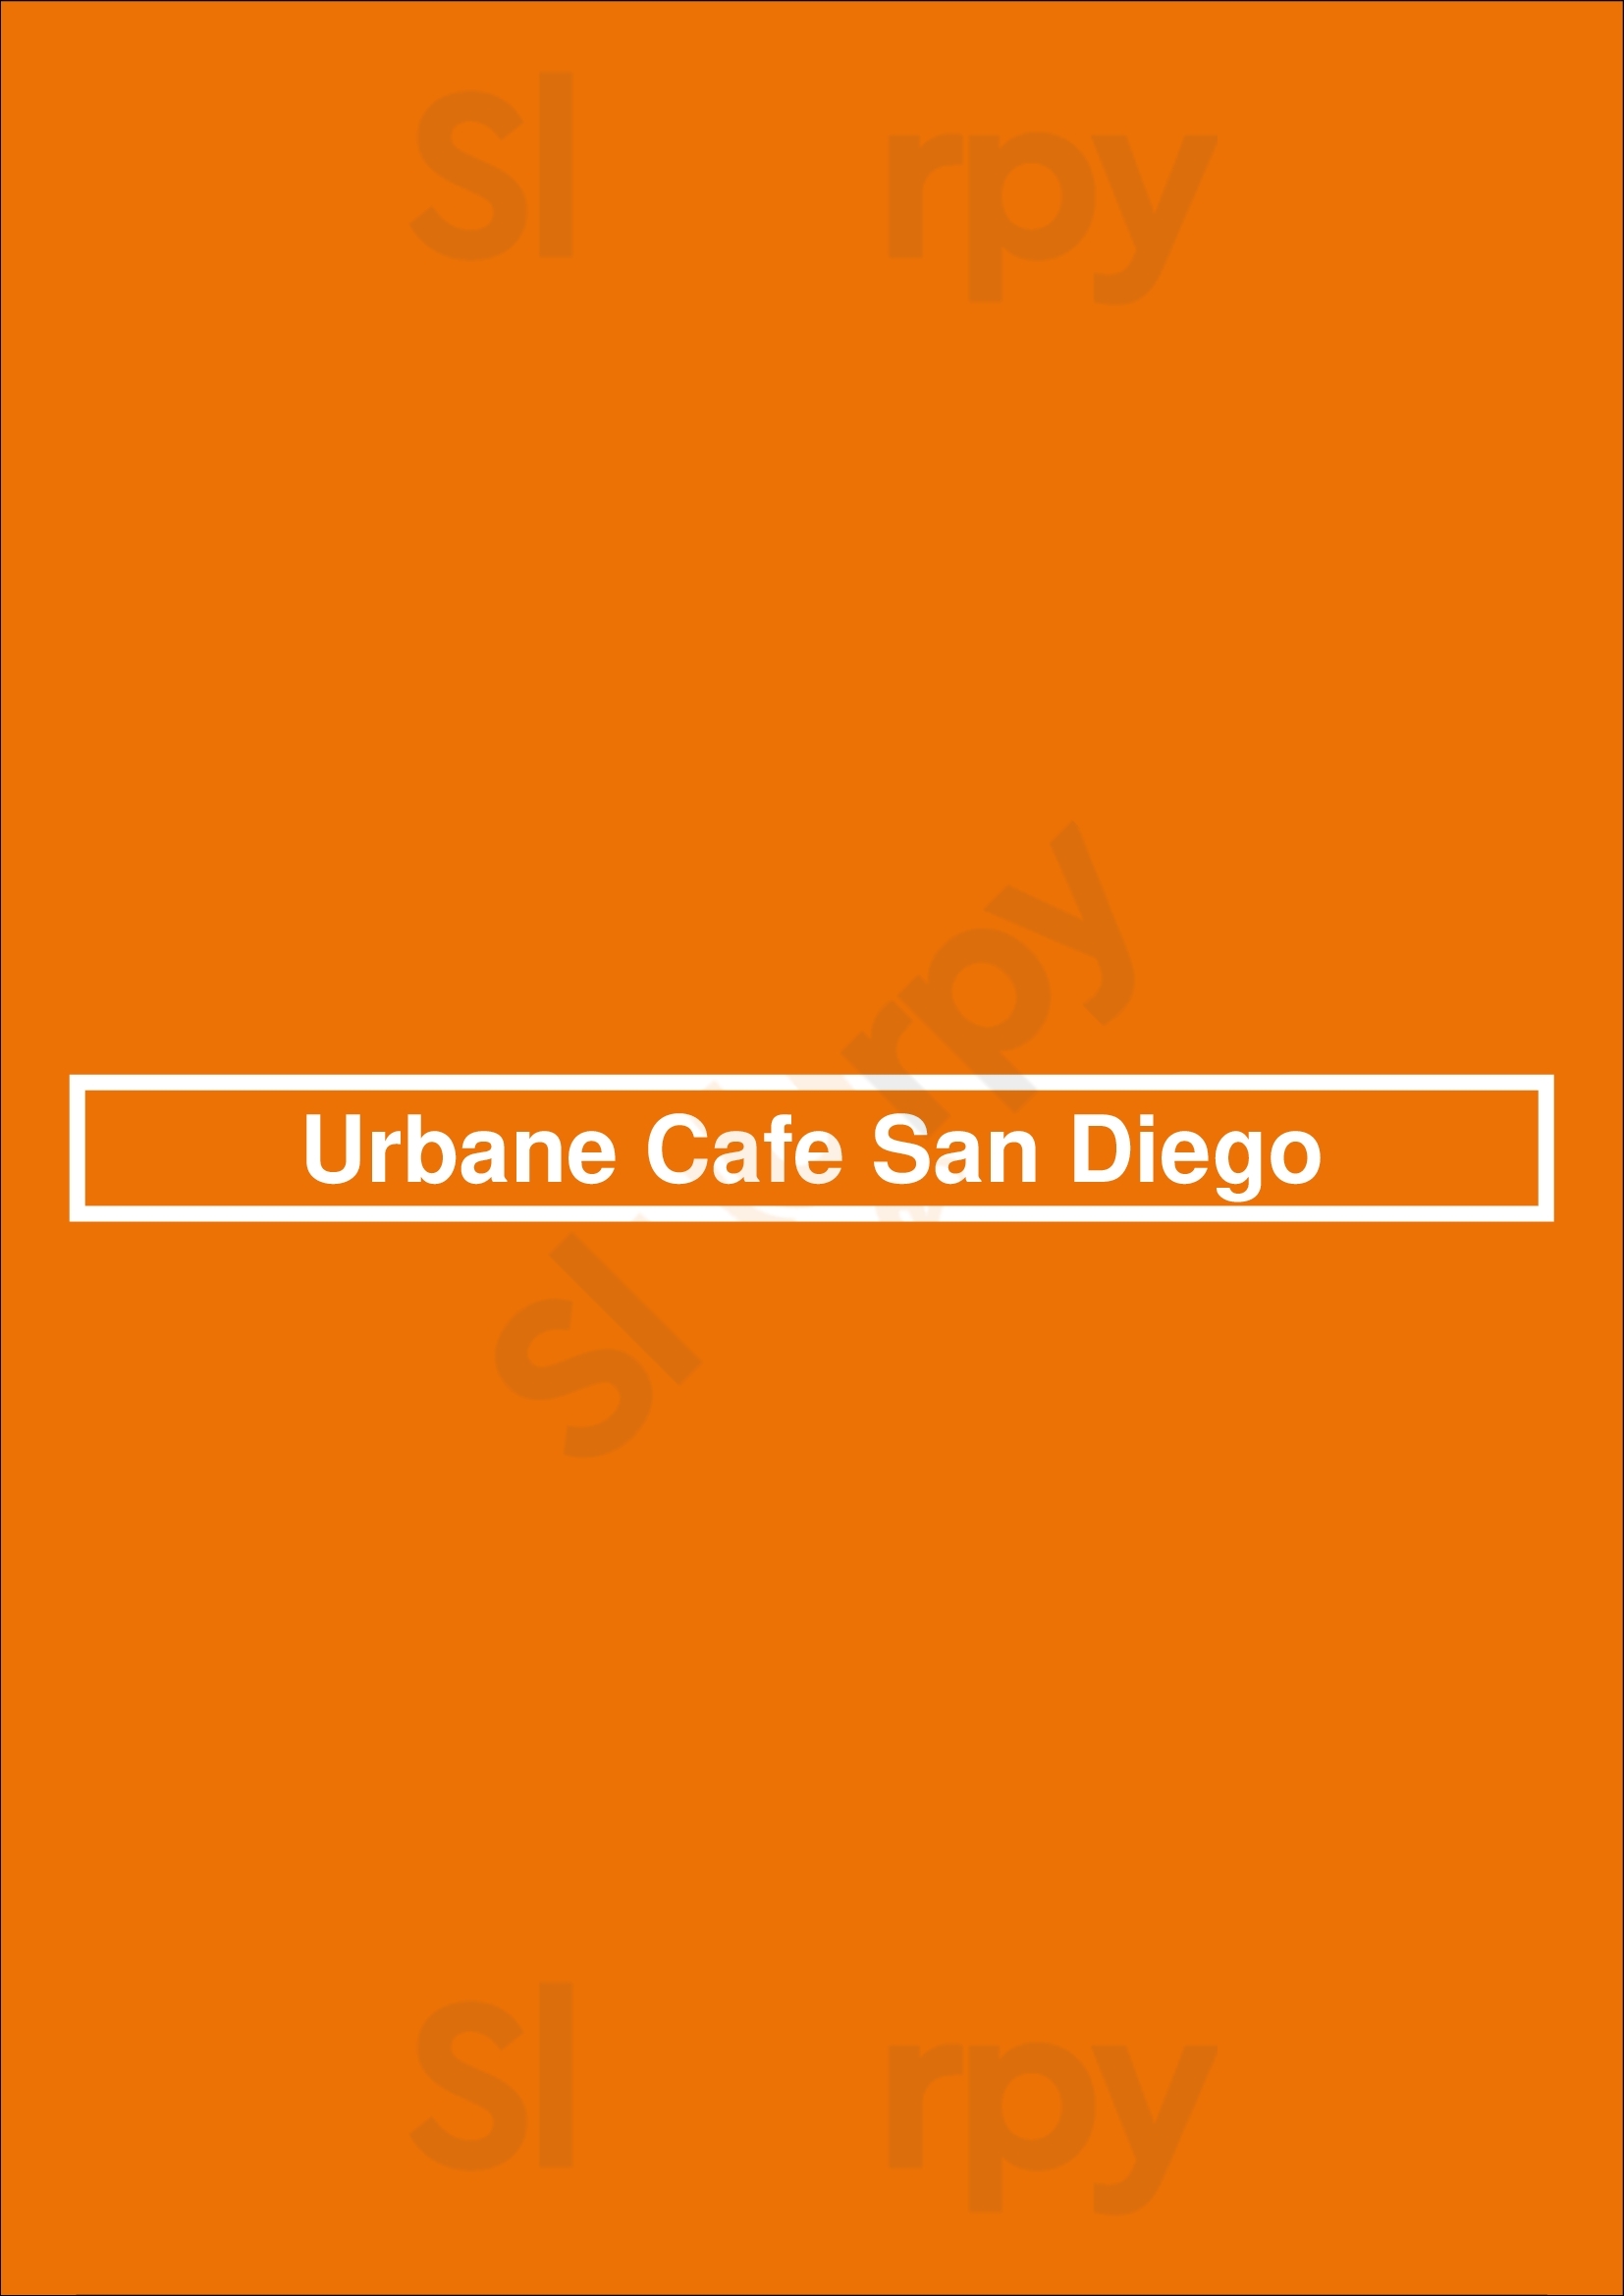 Urbane Cafe San Diego San Diego Menu - 1